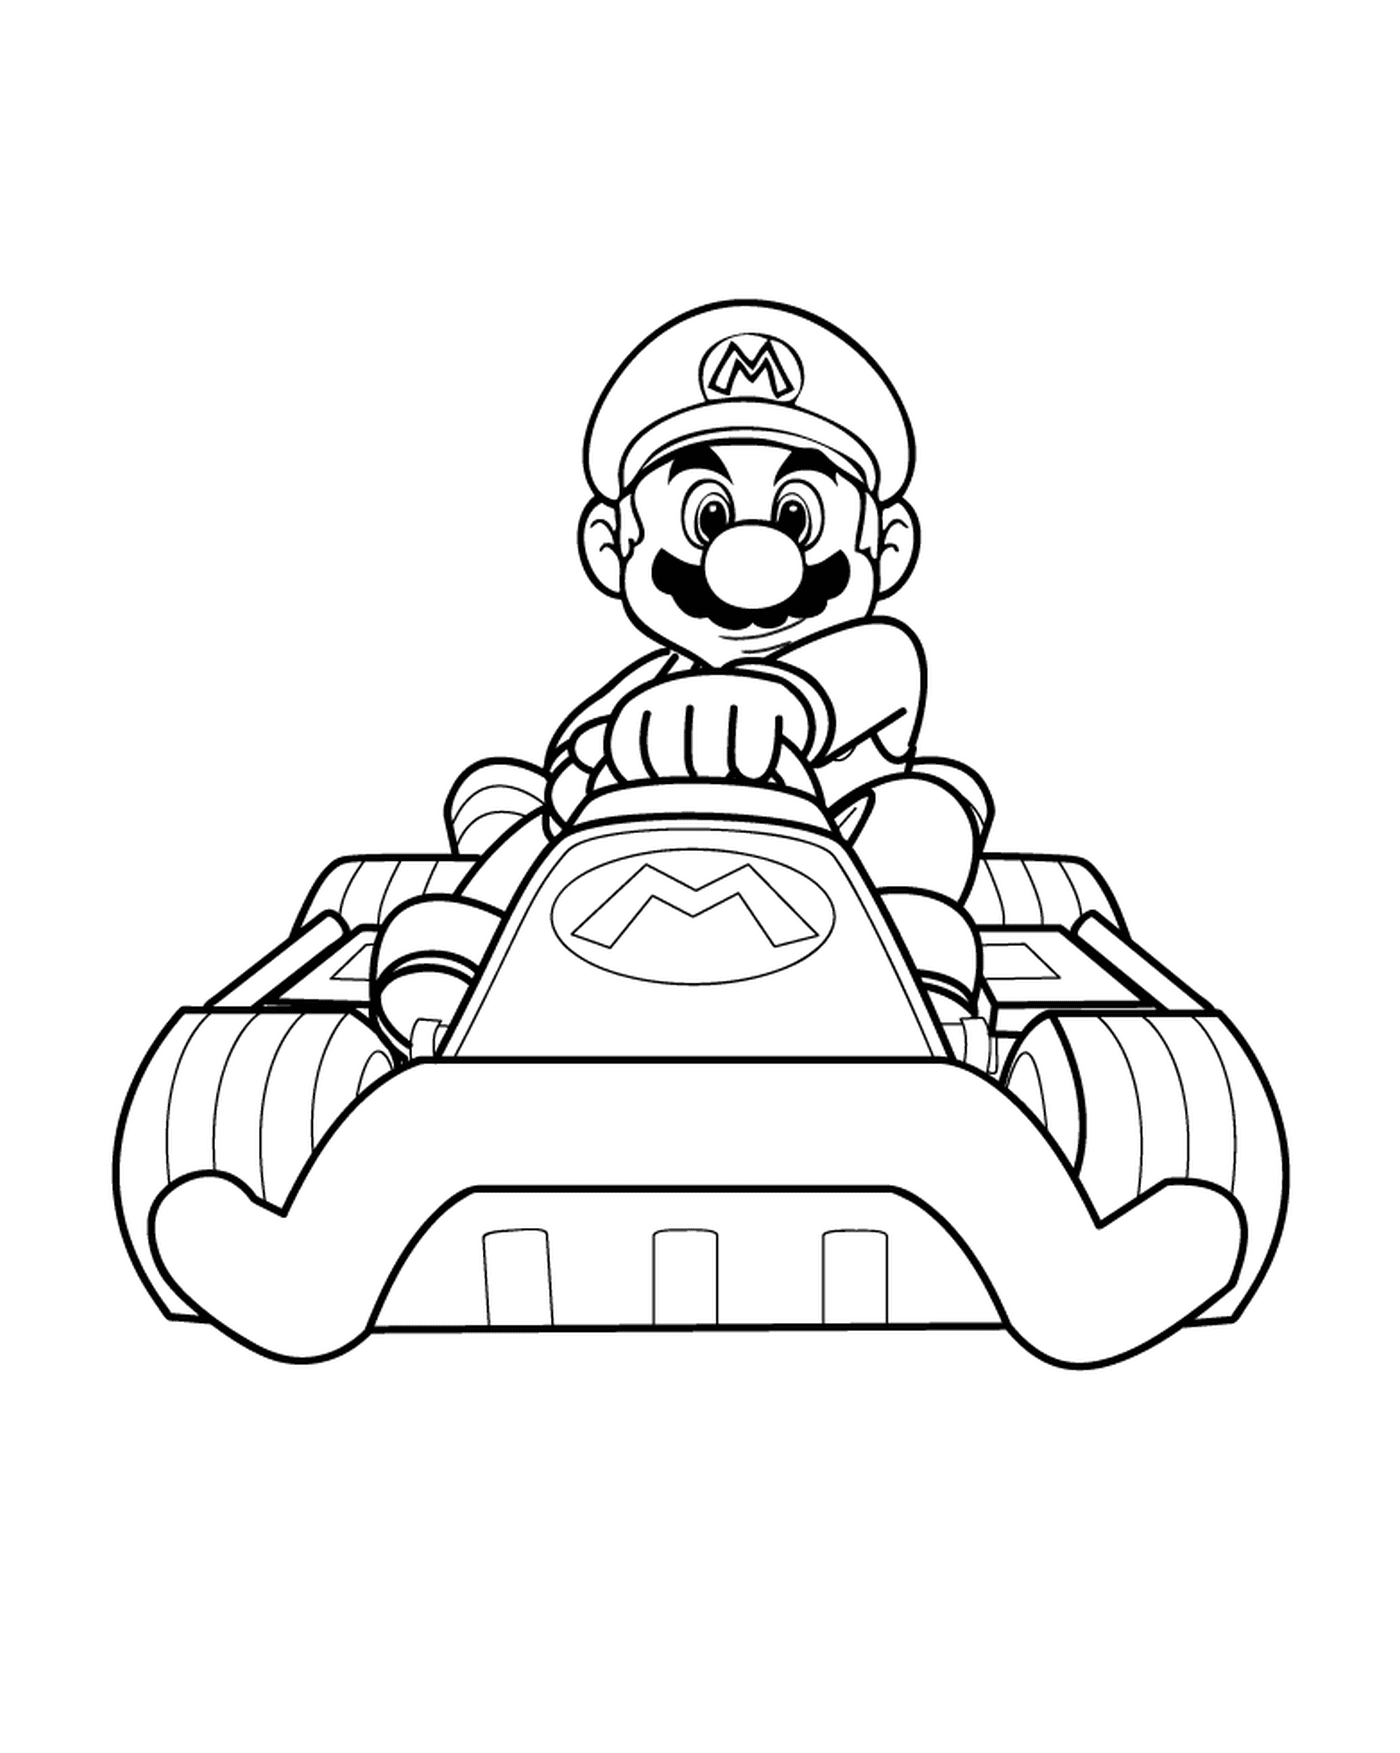  Mario Kart per ragazzo 